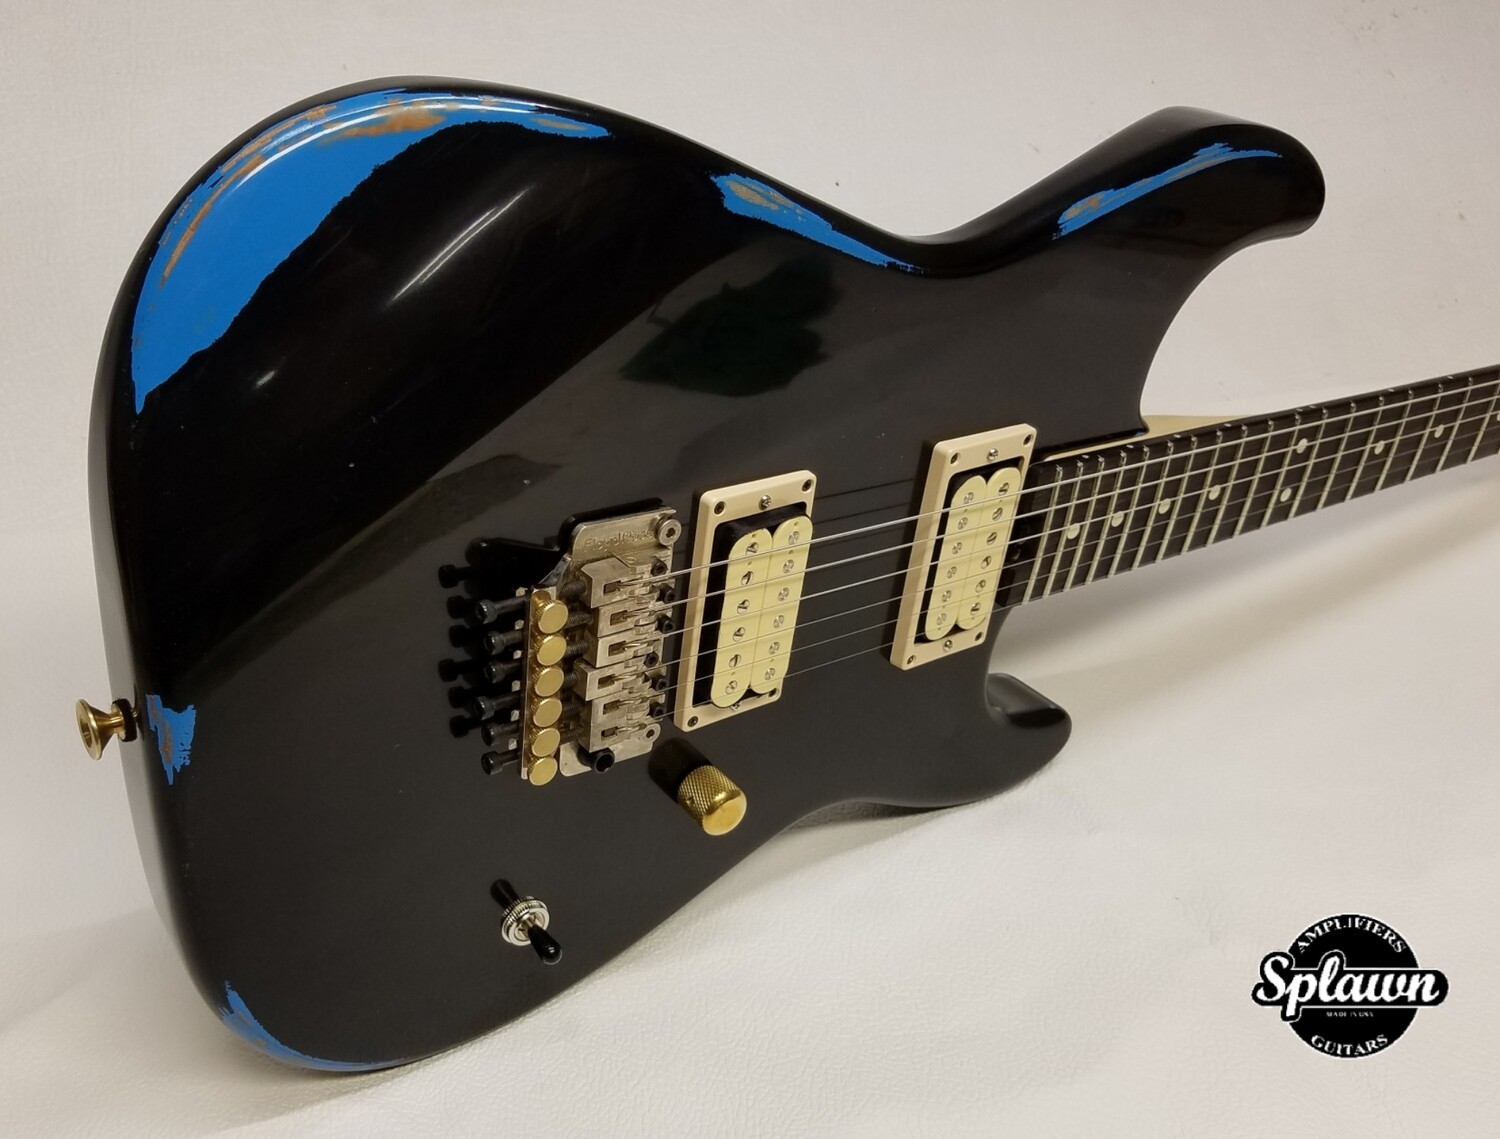 Splawn SS1 Guitar Nitro Relic Black over Maui Blue